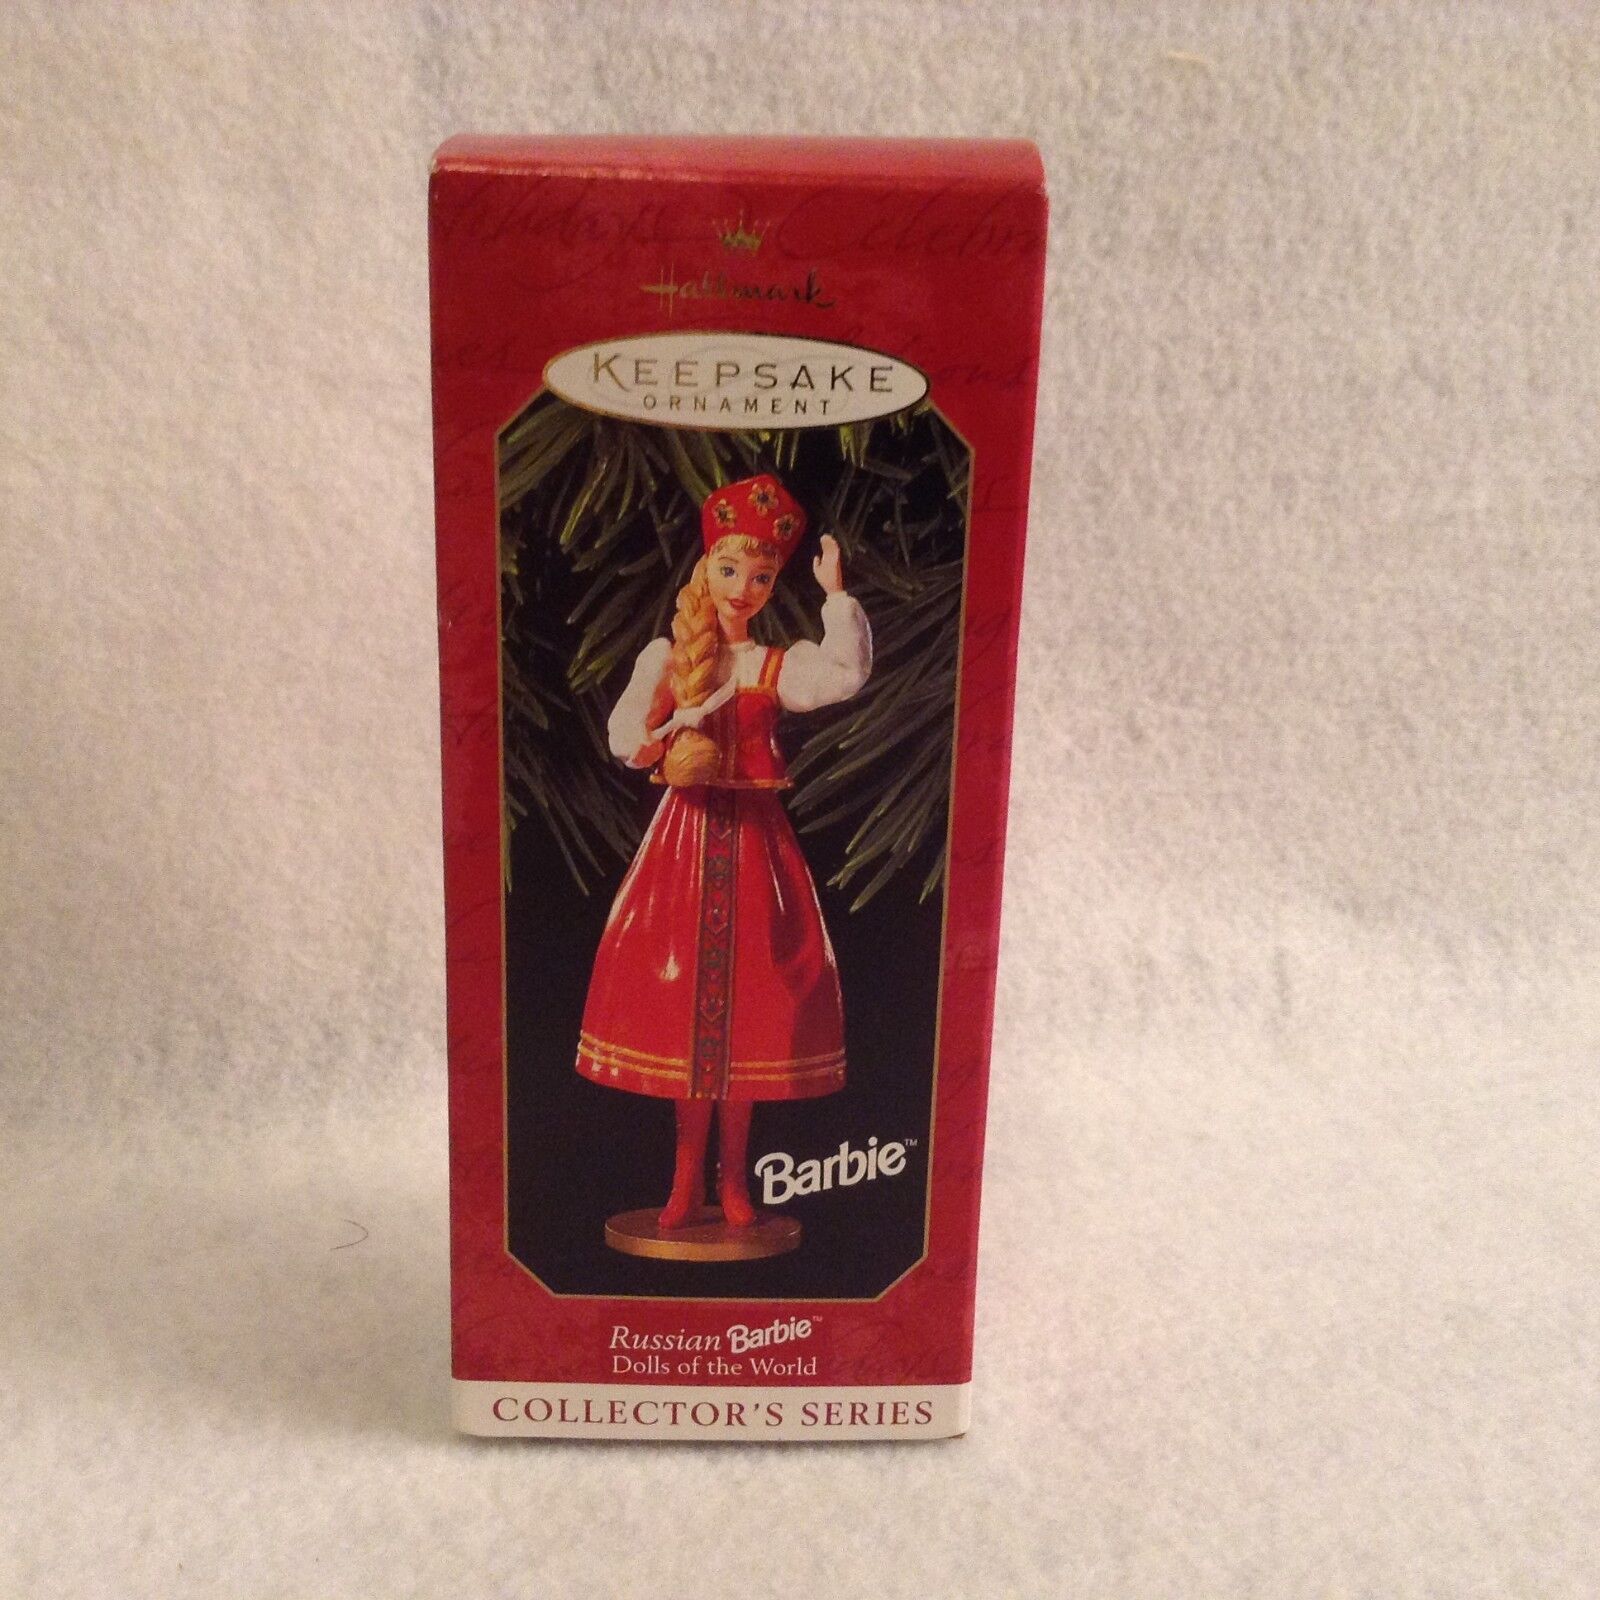 Hallmark Keepsake Christmas Ornament, Russian Barbie Collectible Holiday Decor